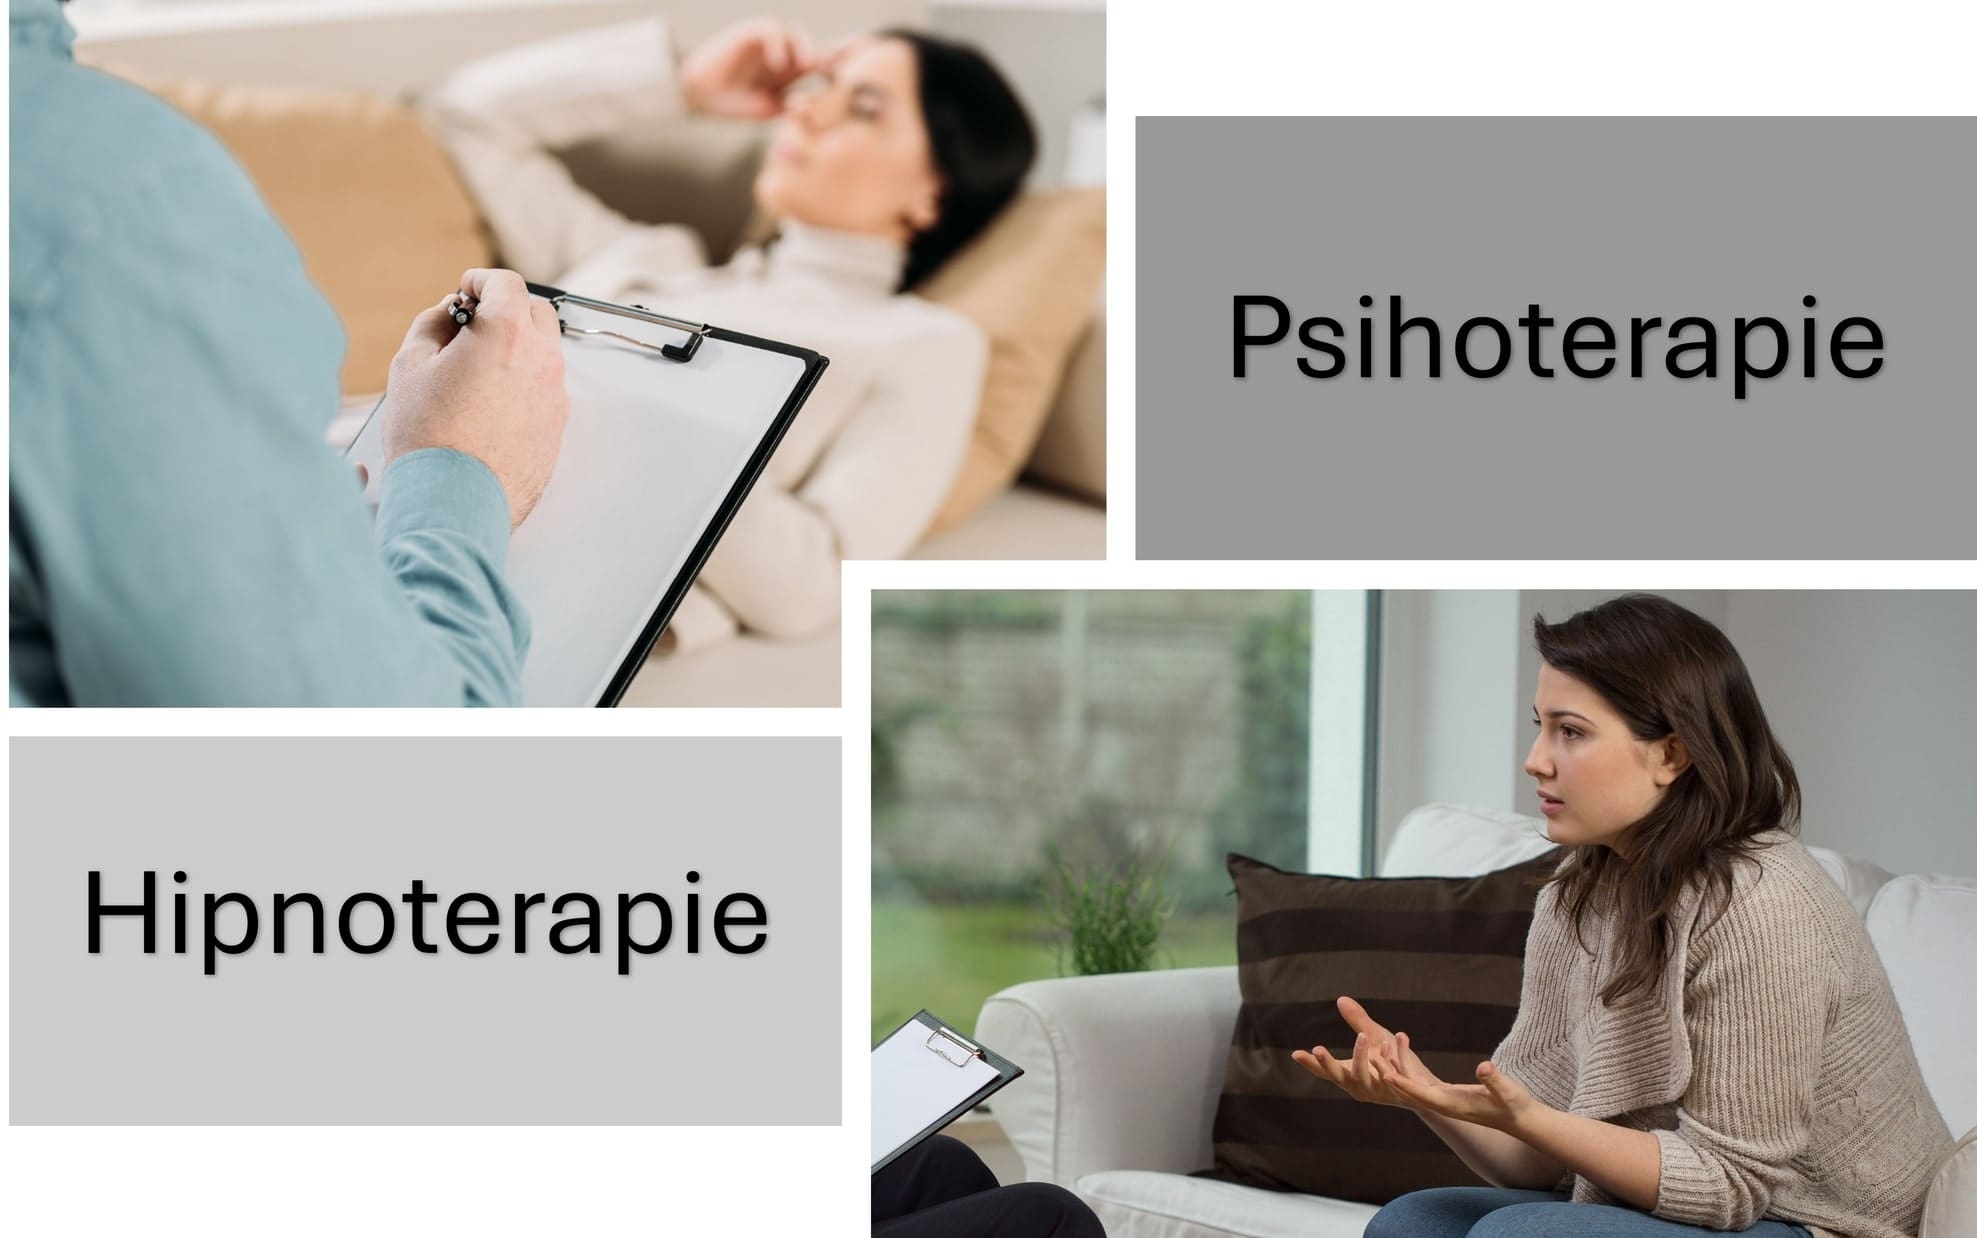 psihoterapie vs hipnoterapie